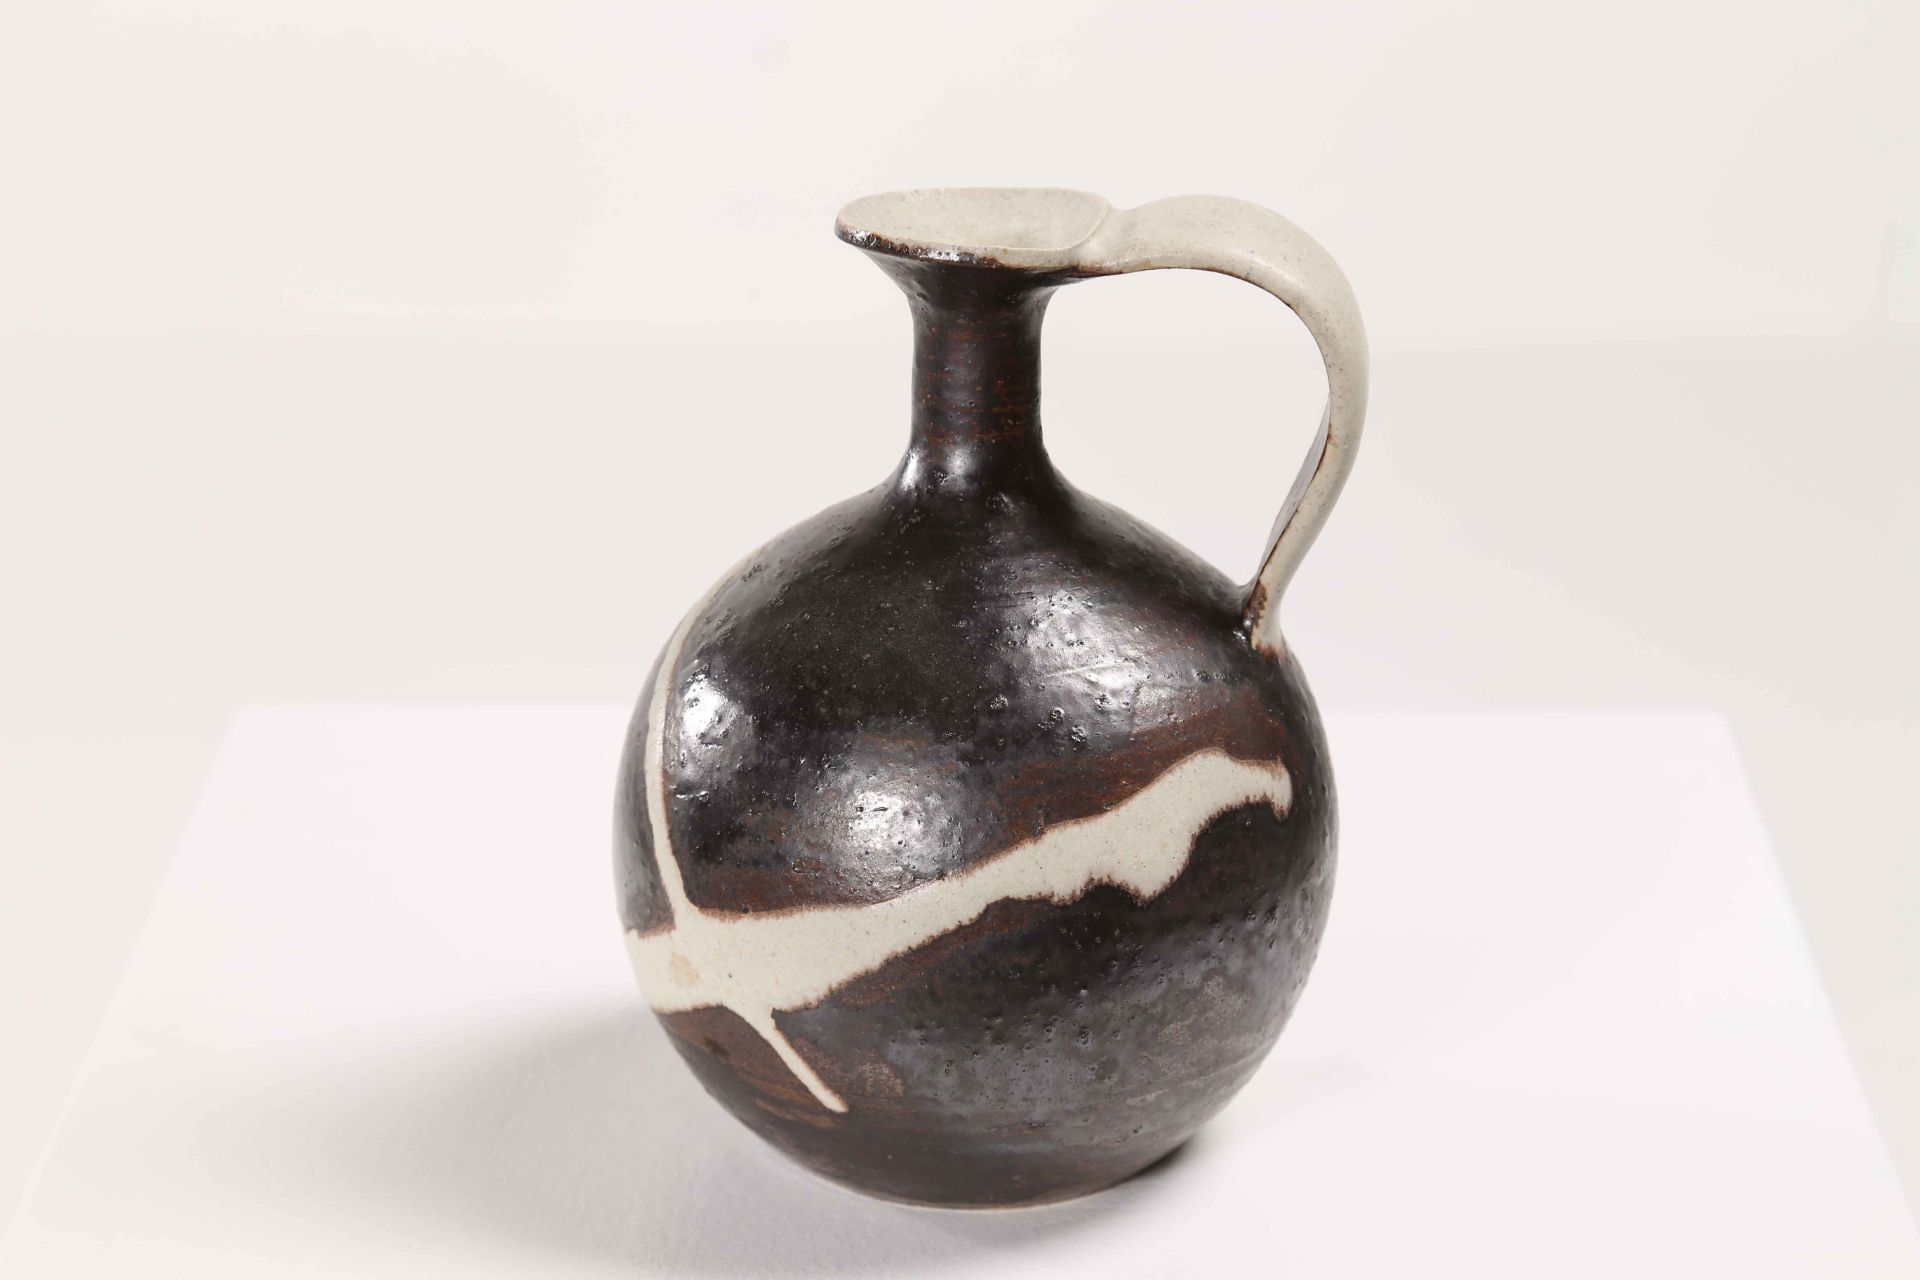 GAMBONE BRUNO (n. 1936)
Ceramic vase
Florence. 1970s. Signed at the base.

16,00 x 20,00 cm